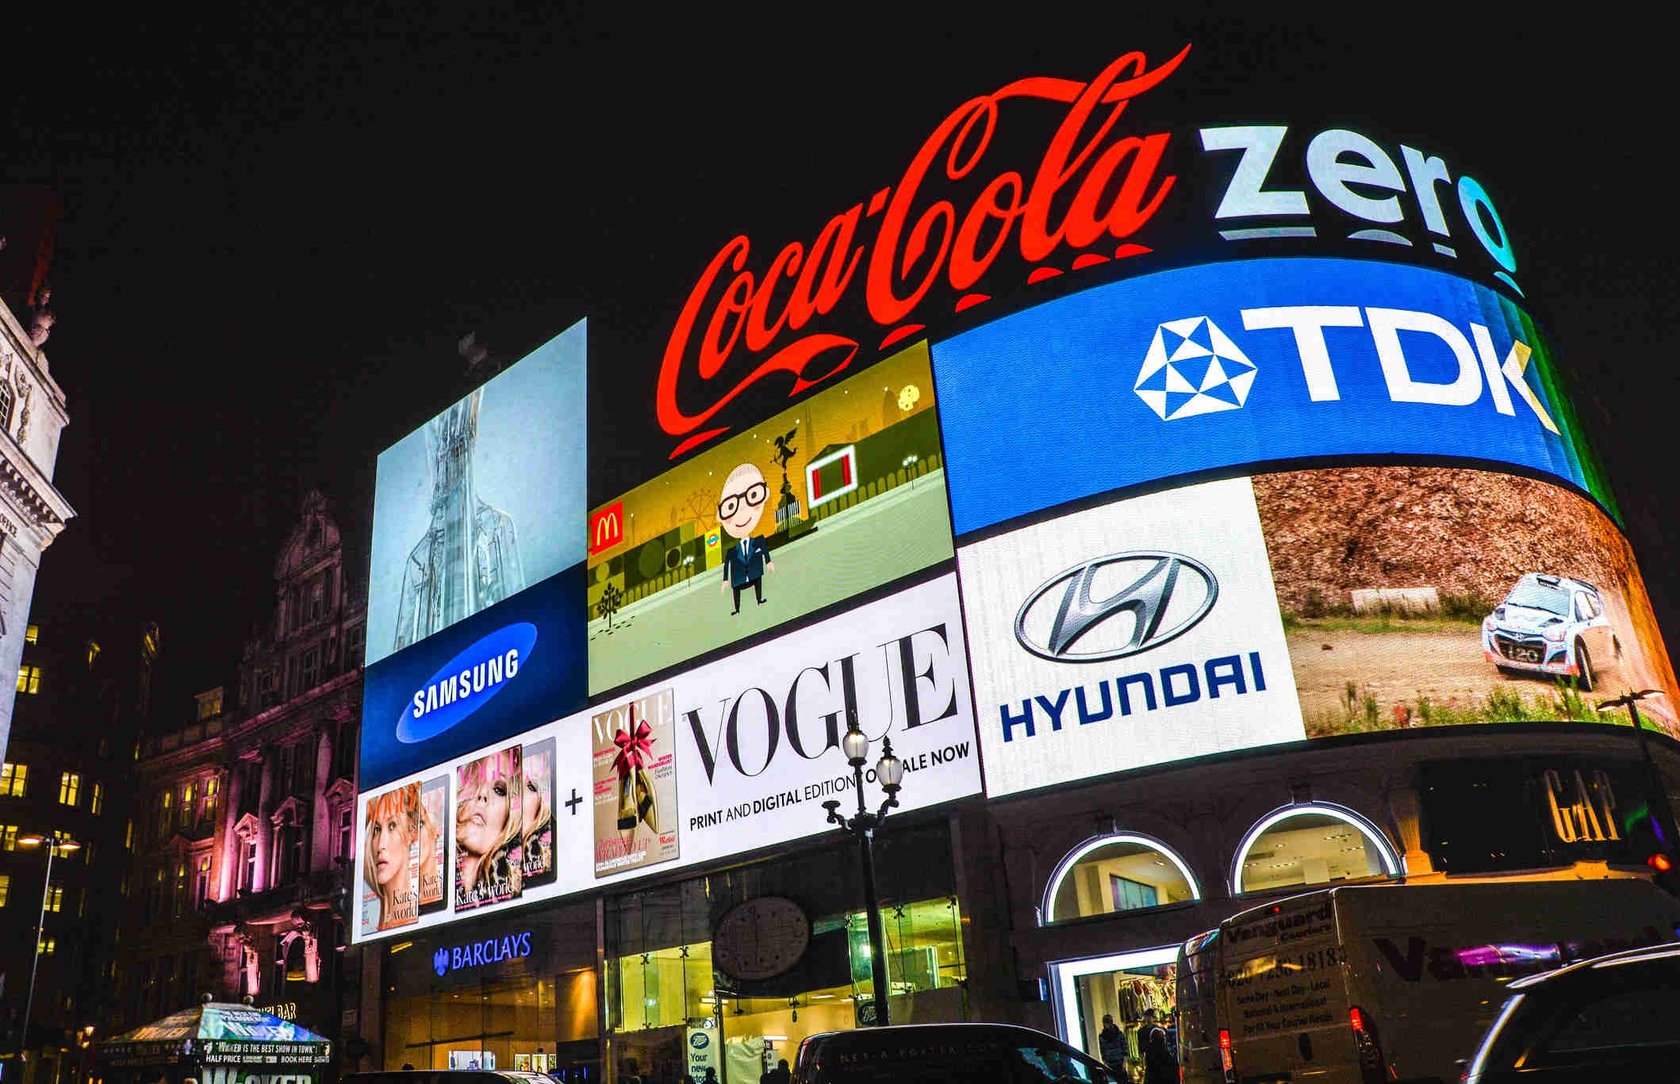 Digital billboard of various brand logos